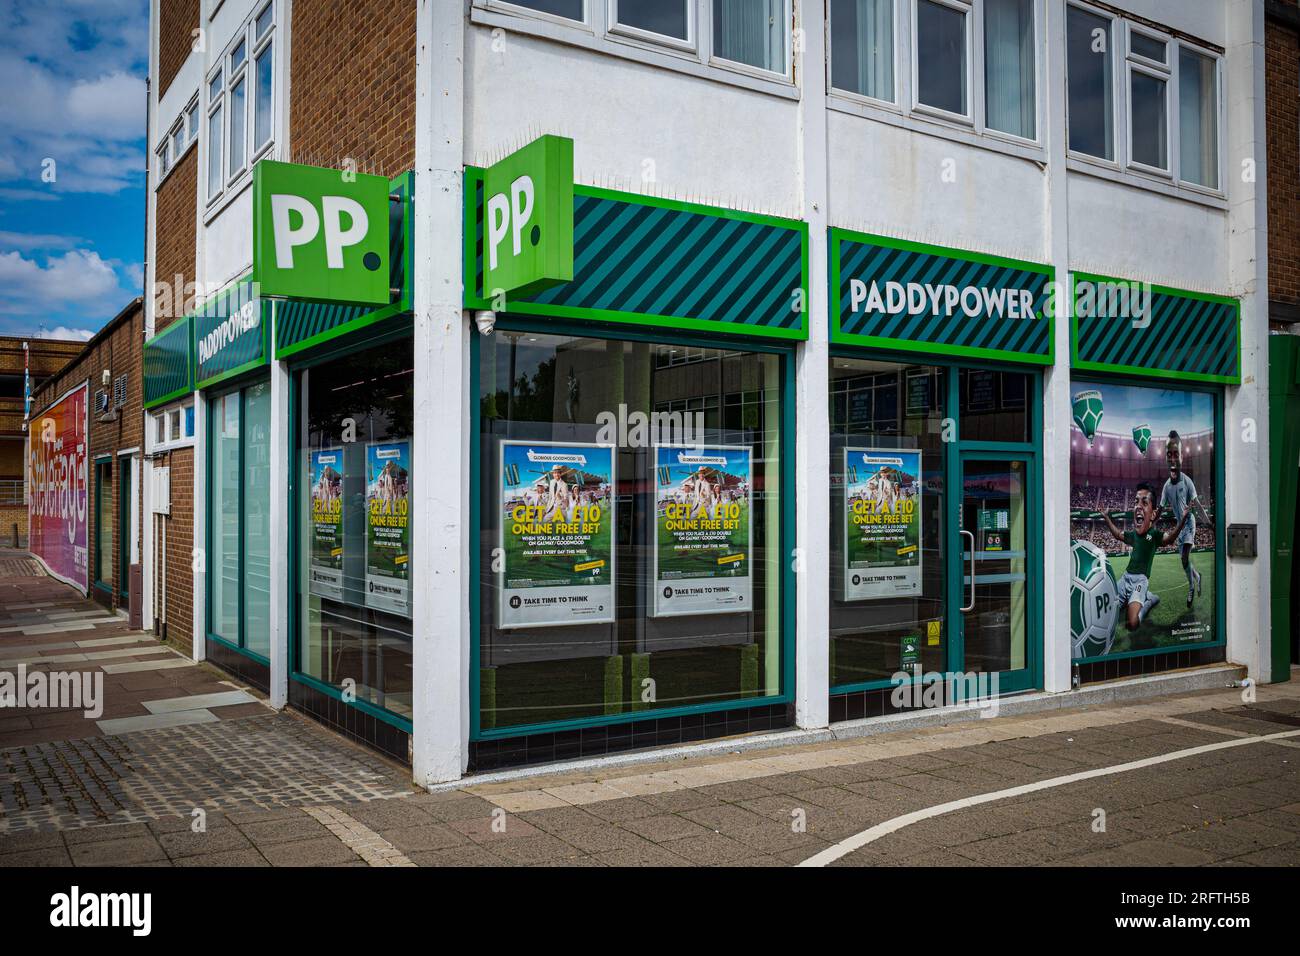 Lizenzierter Wettshop von Paddy Power - Paddy Power Bookmakers Shop in Stevenage. Paddy Power wurde 1988 in Dublin gegründet. Stockfoto